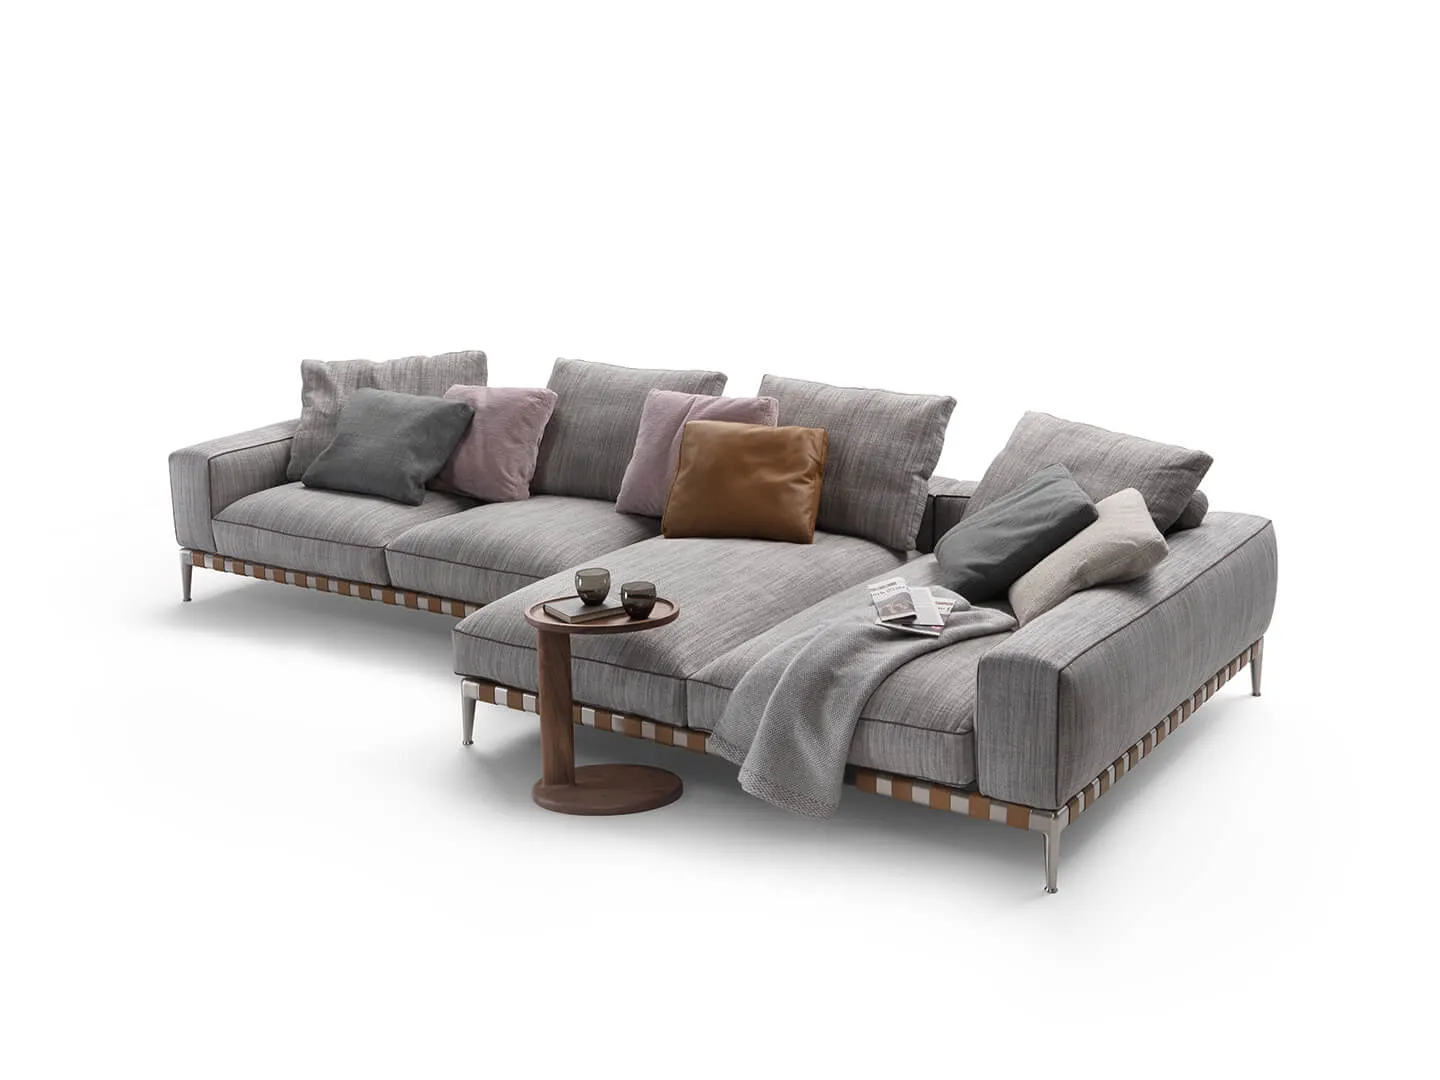 Gregory XL sectional sofa, Antonio Citterio design